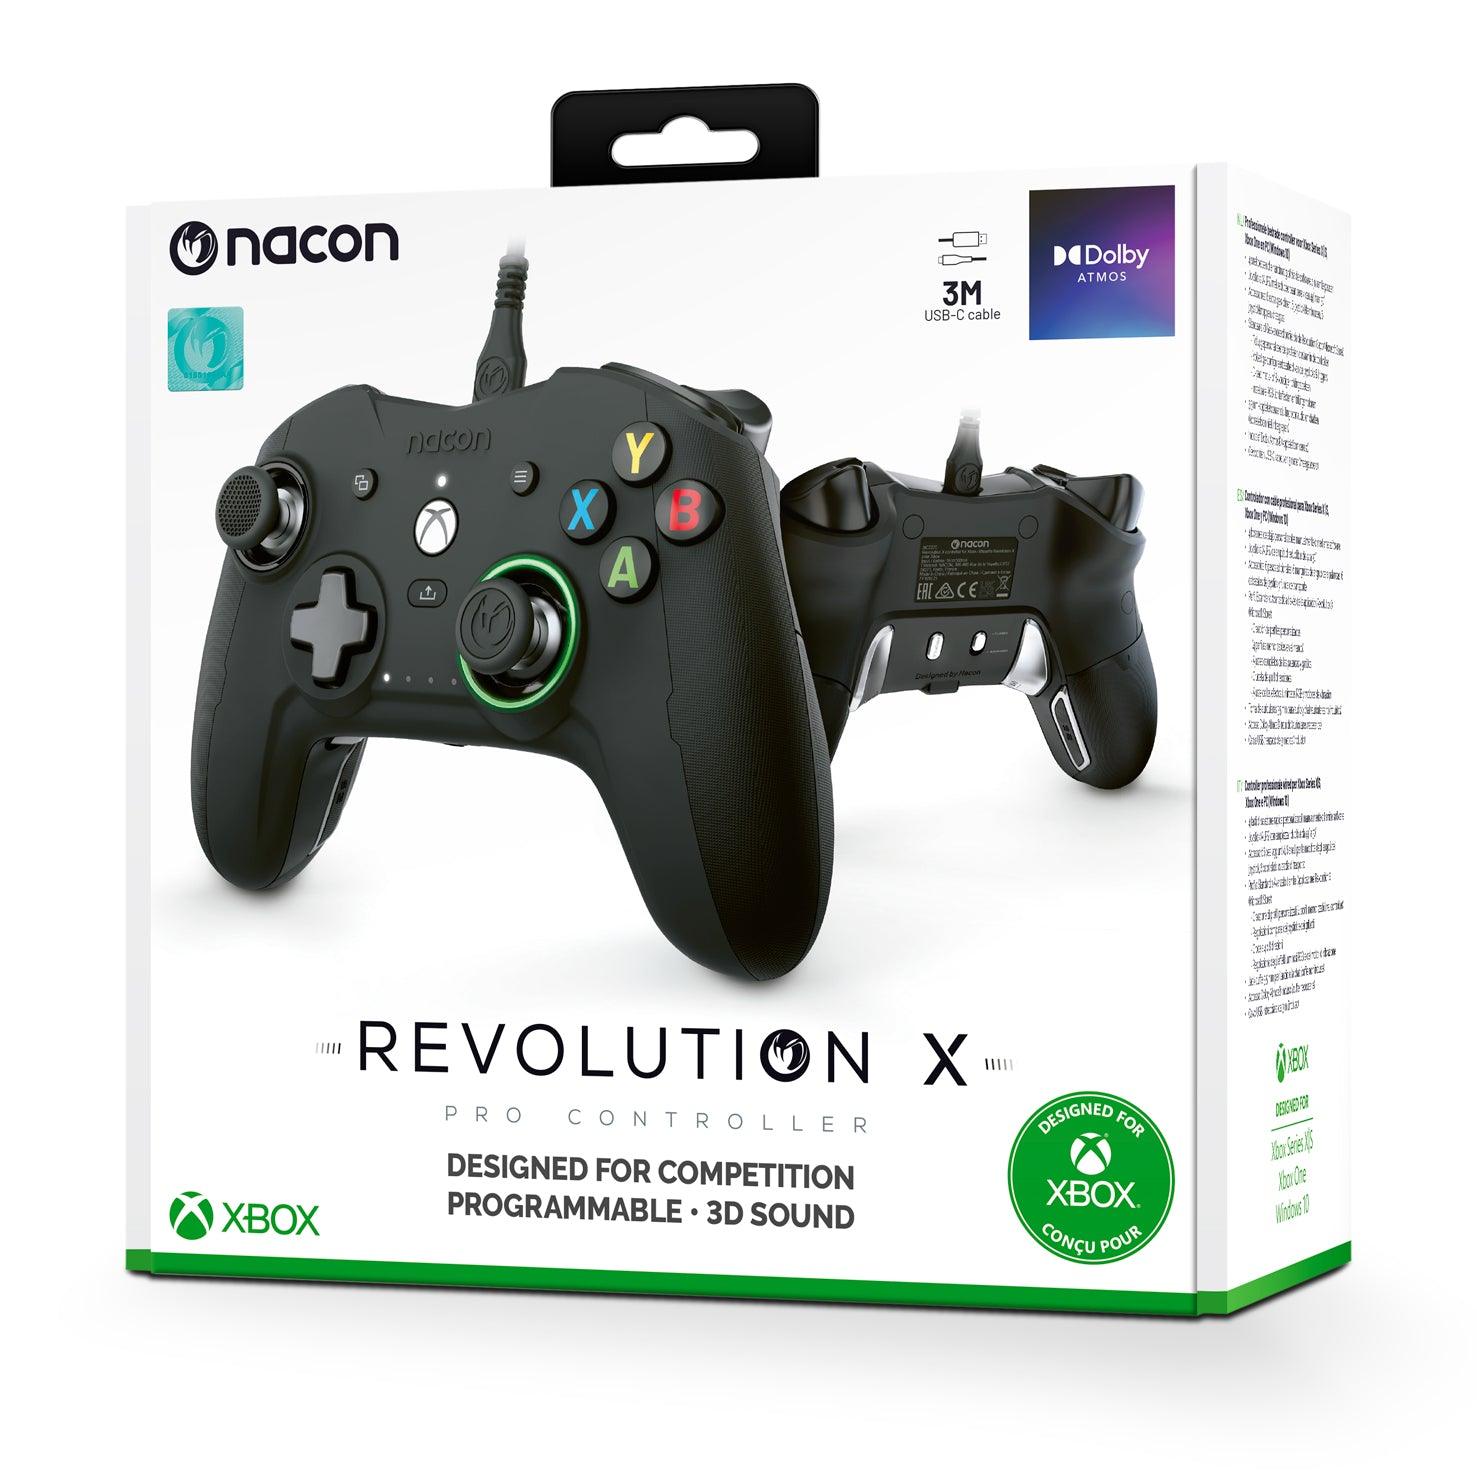 Revolution X Controller - Want a New Gadget